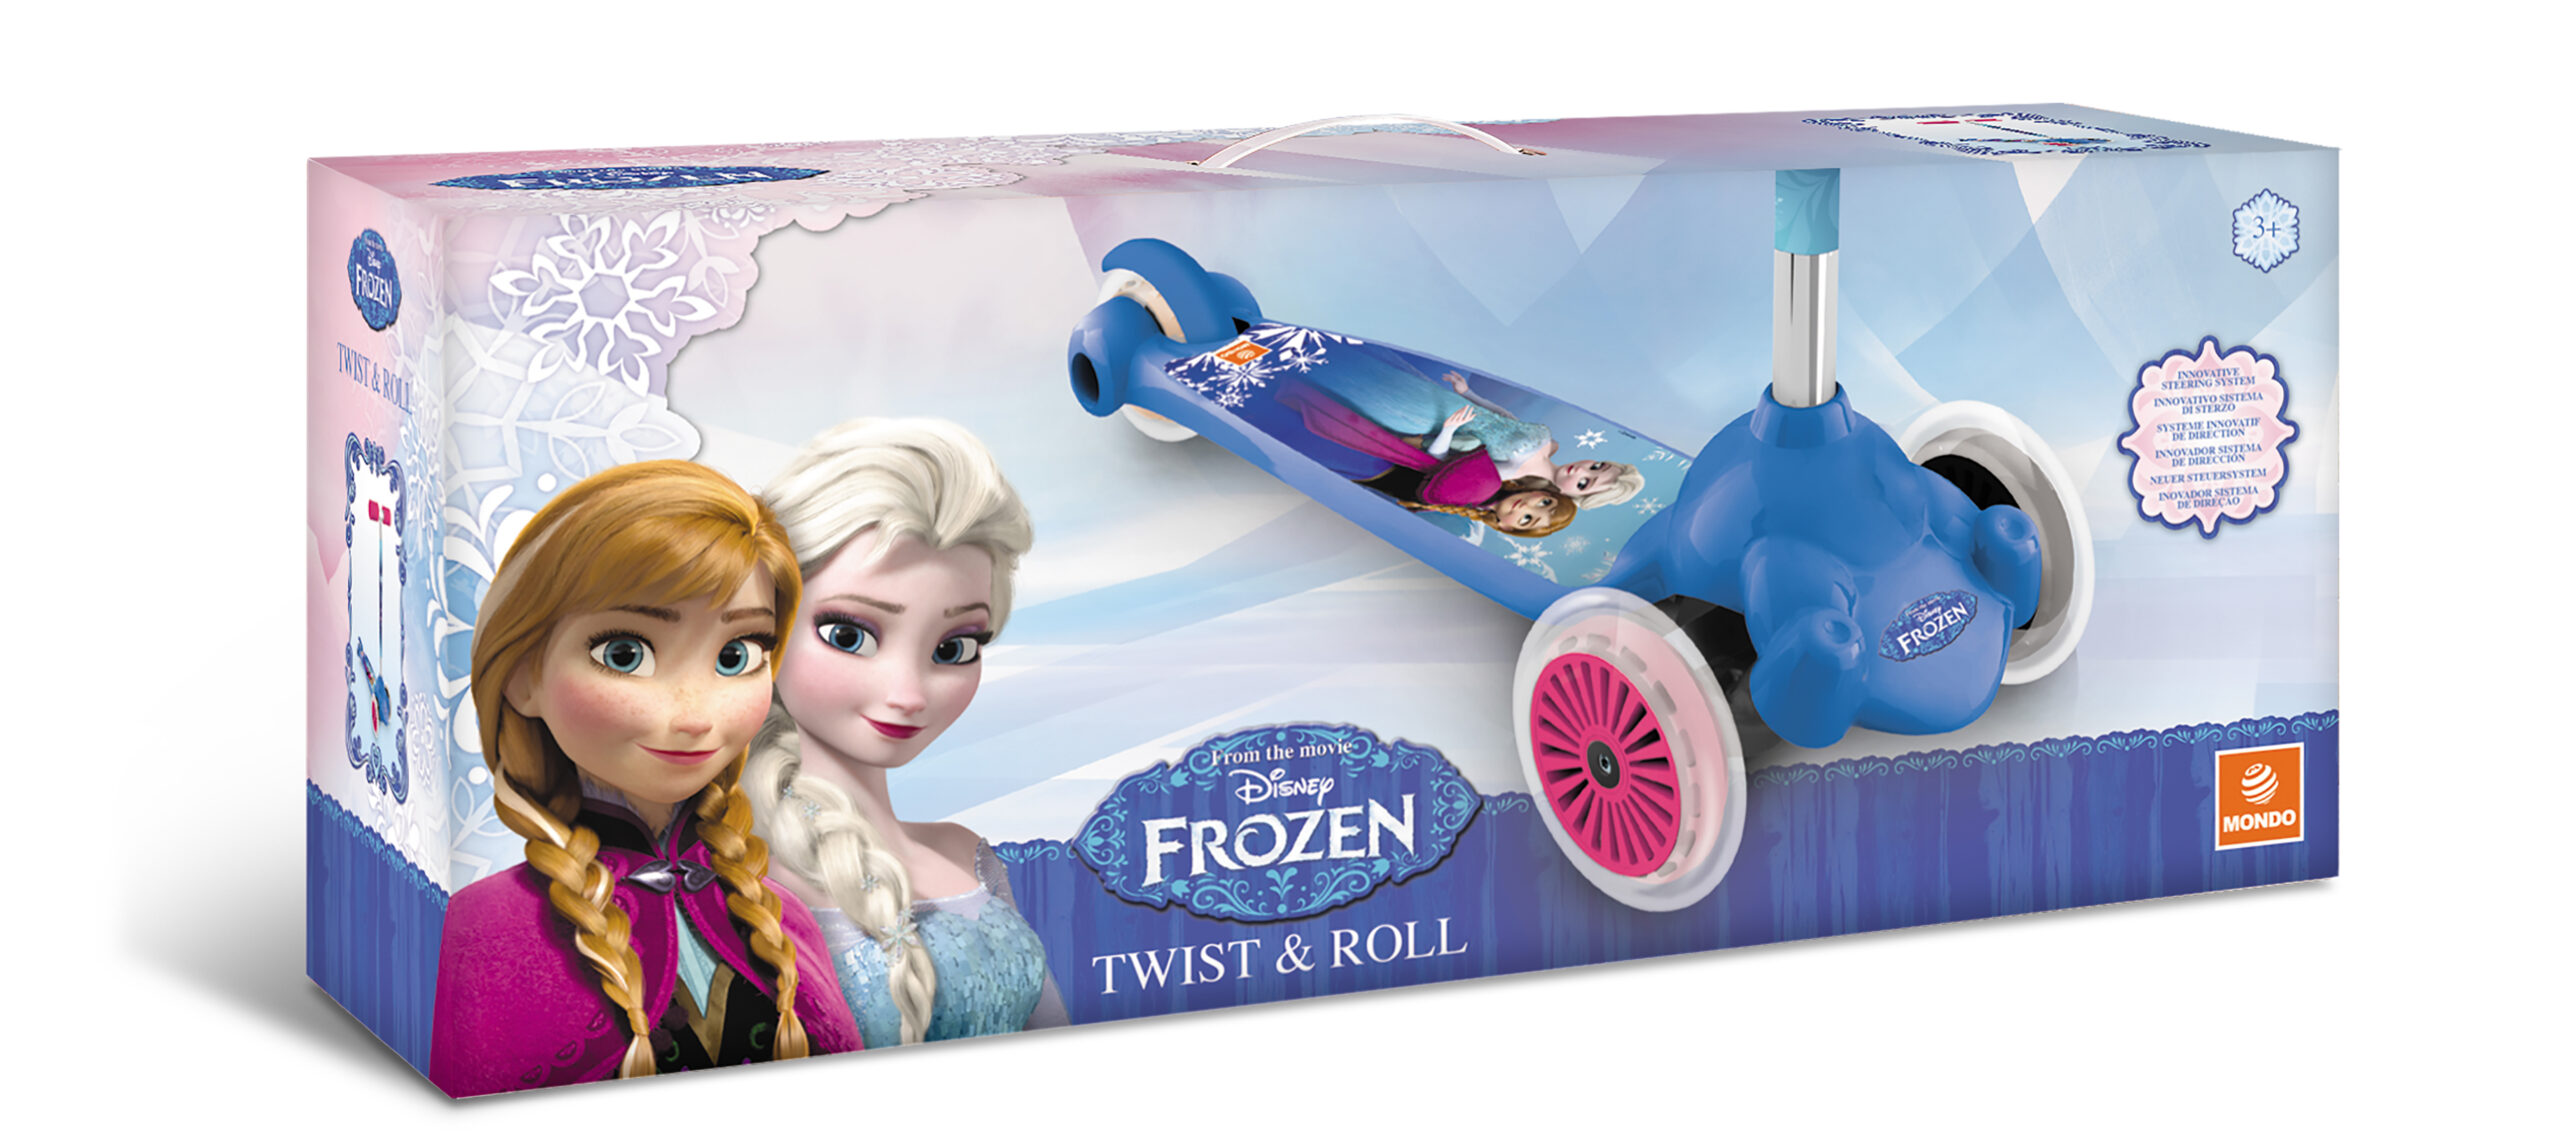 Twist & roll frozen - DISNEY PRINCESS, Disney